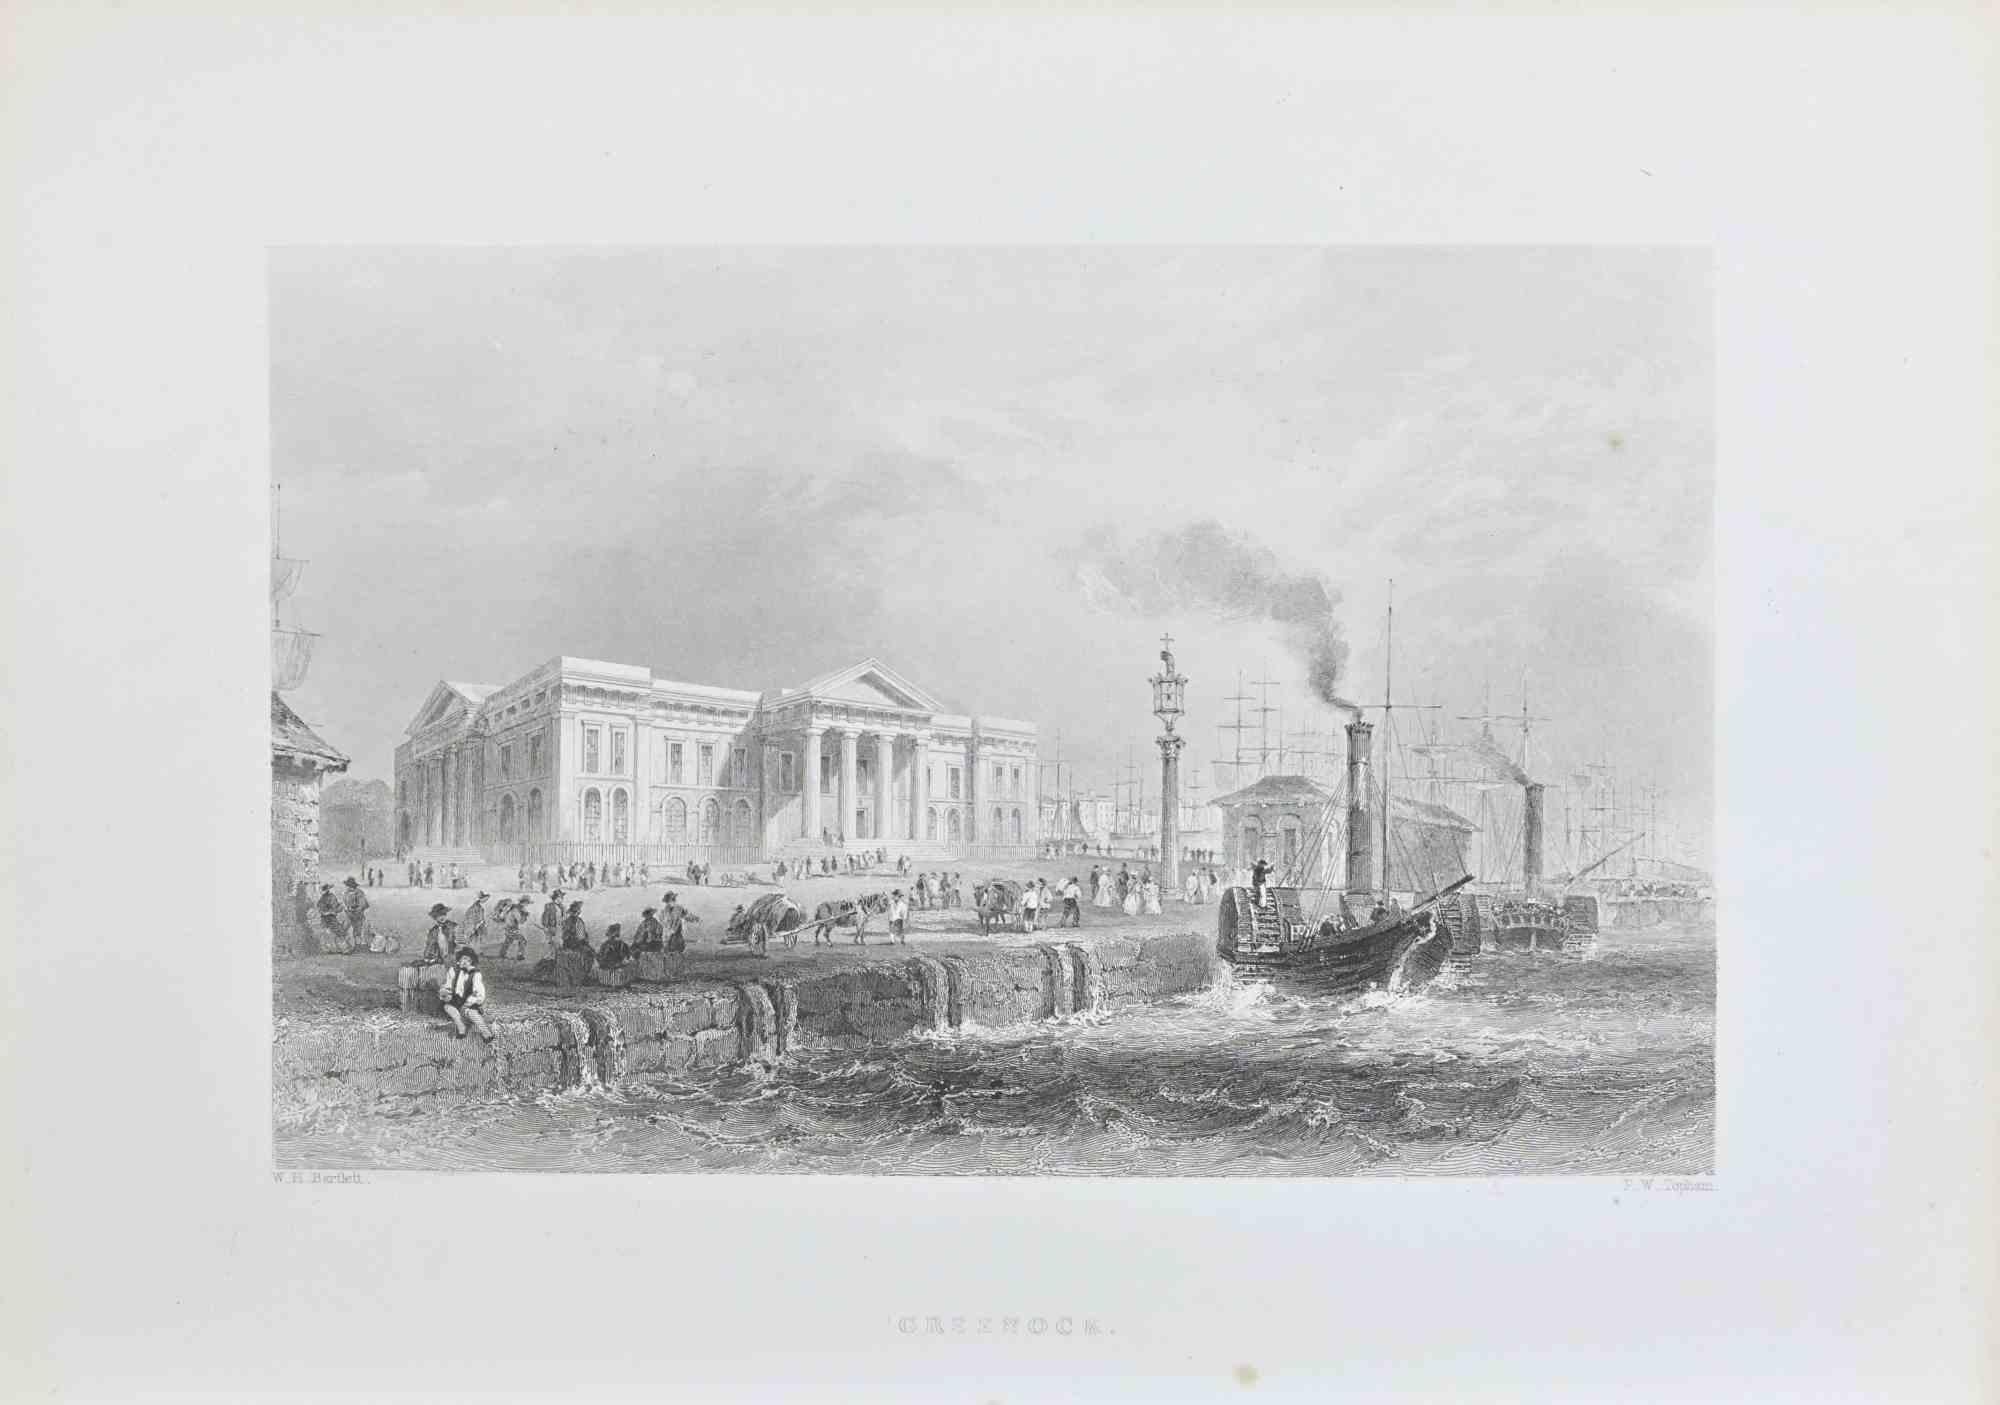 Greenock - Etching by F. W. Topham - 1845